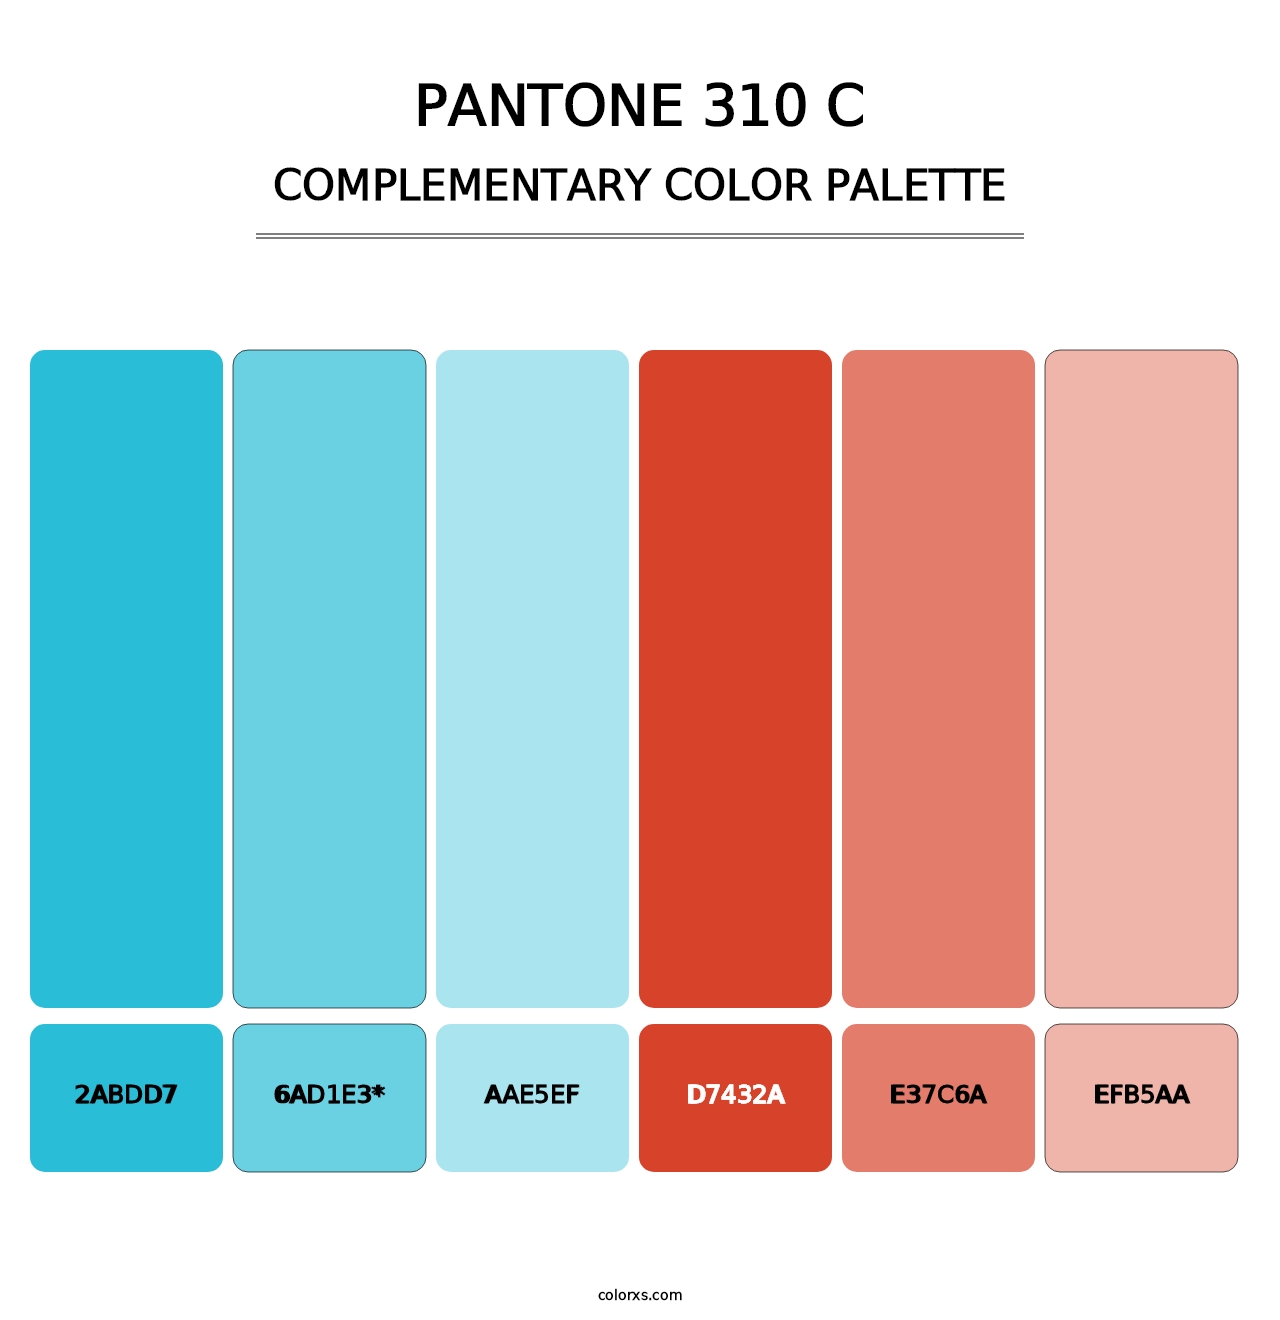 PANTONE 310 C - Complementary Color Palette